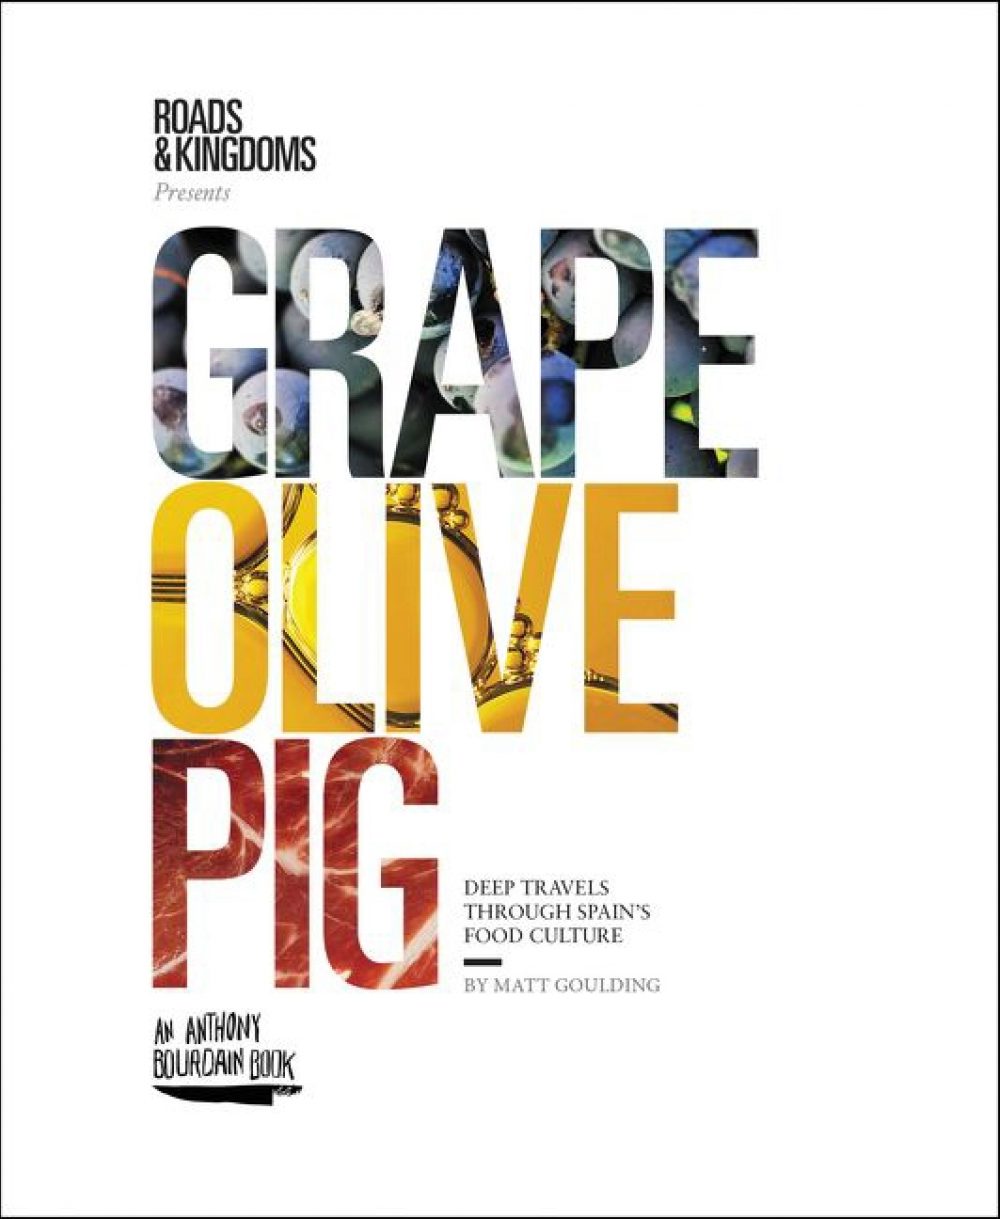 Grape, Olive, Pig